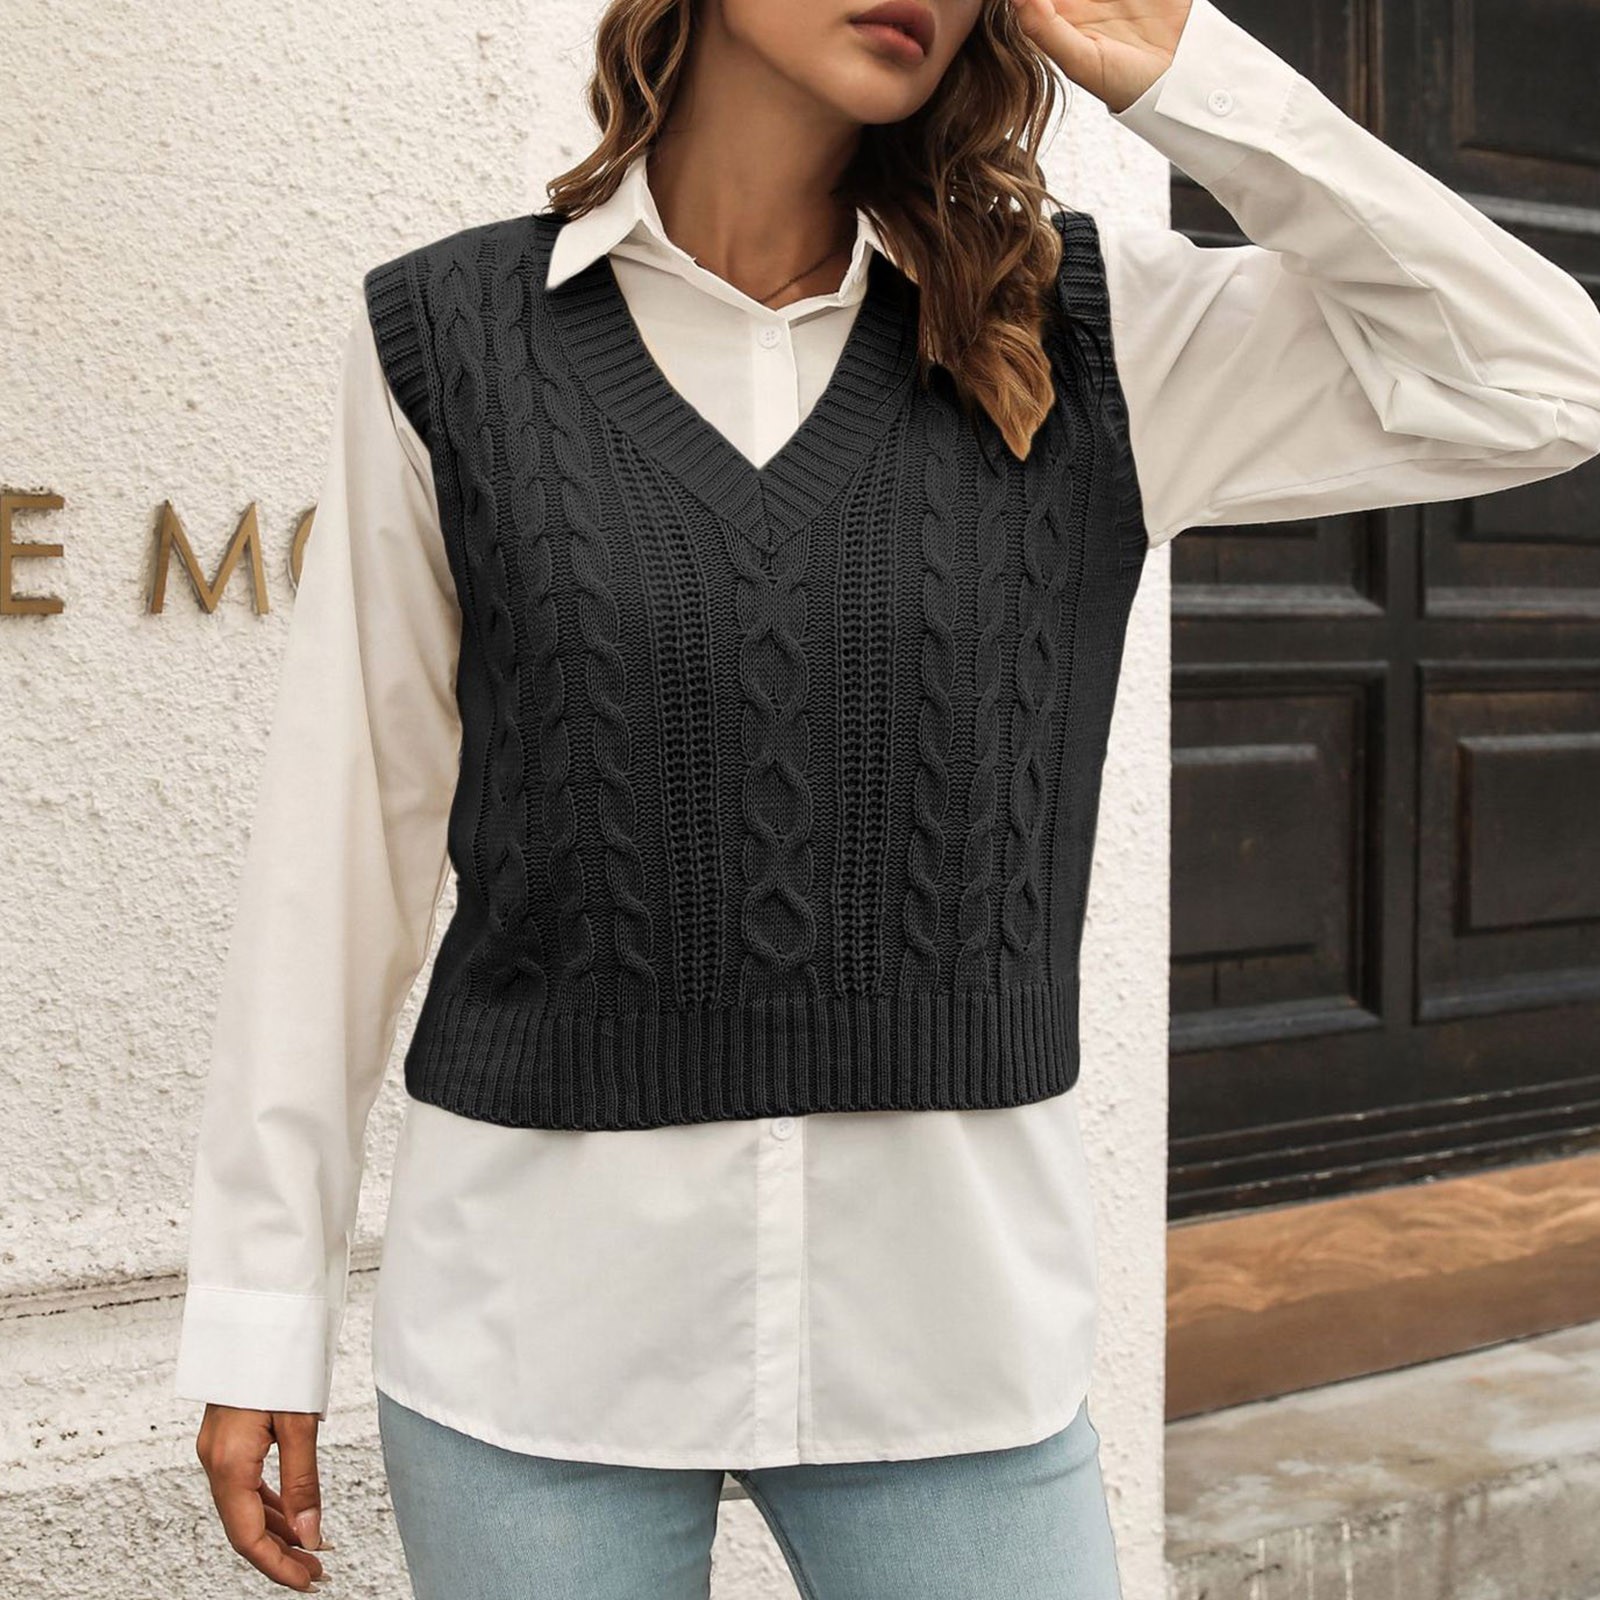 Ediodpoh Women's Preppy Style Knitwear Tank Top Sleeveless V-Neck Vintage  Sweater Vest Pullover Sweater for Women Khaki XXL